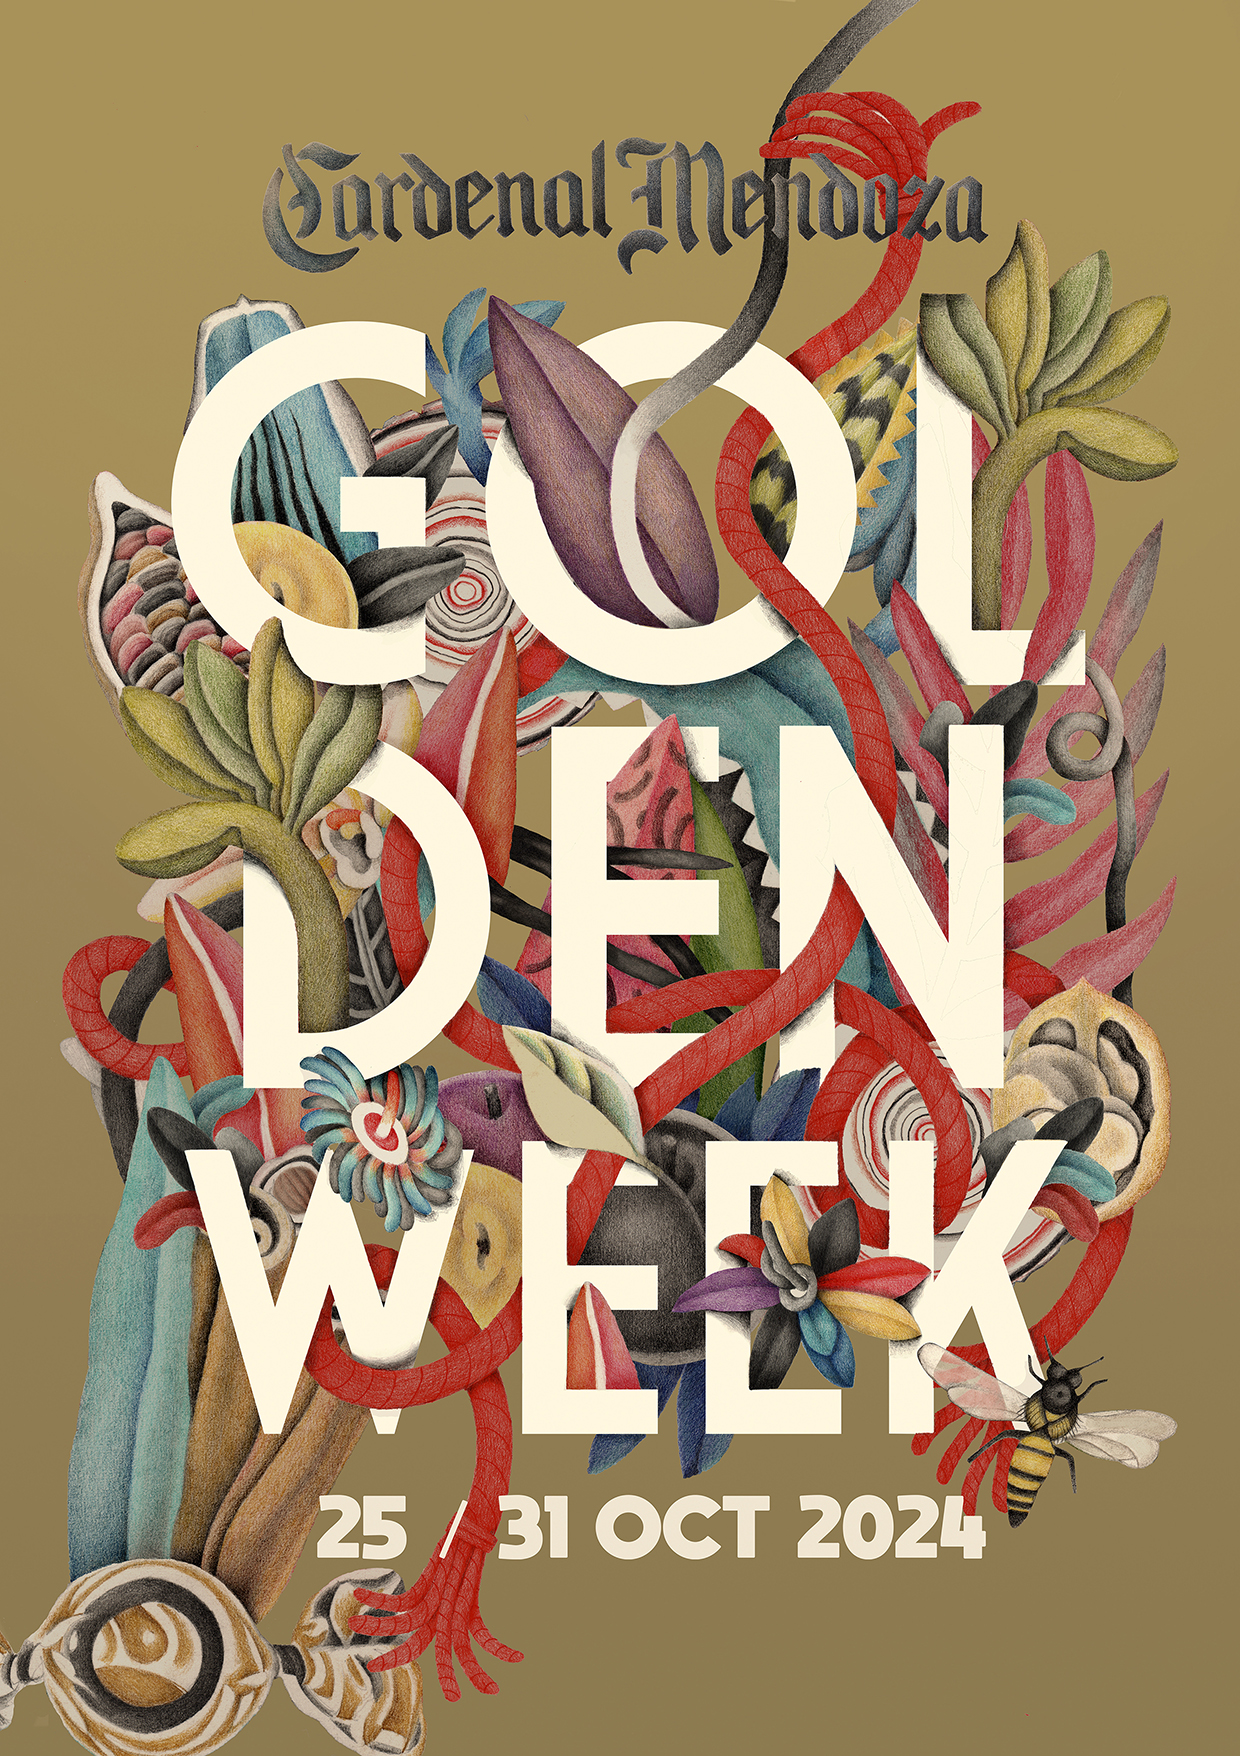 Cardenal Mendoza Golden Week 2024